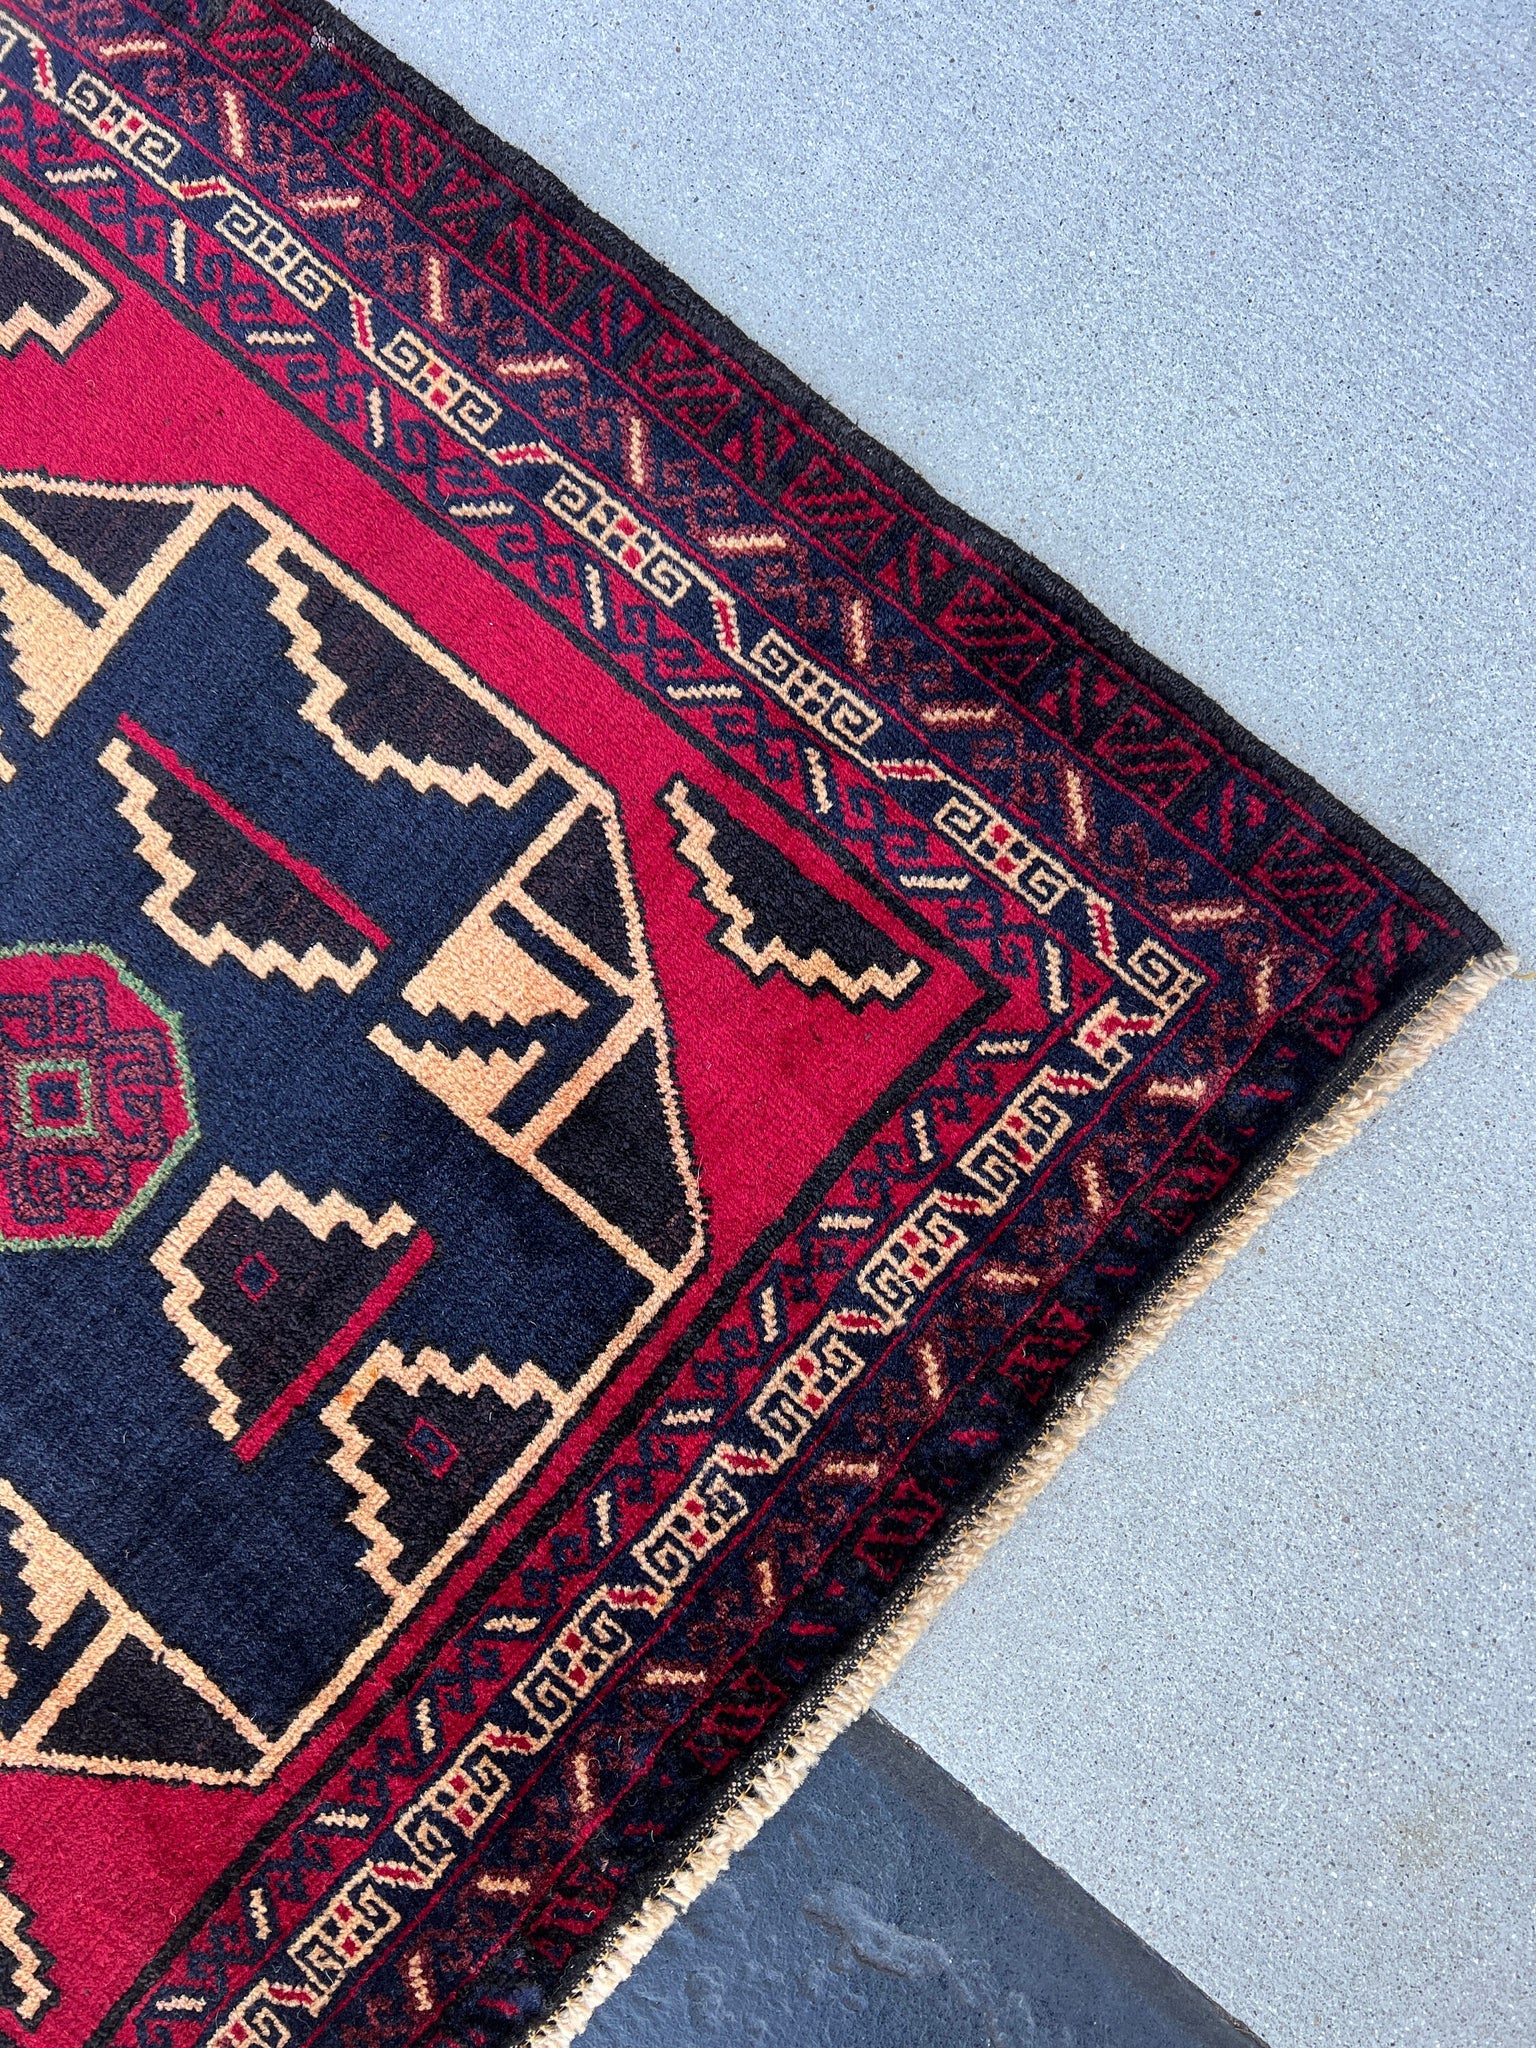 3x5 (100x180) Handmade Vintage Baluch Afghan Rug | Midnight Blue Brick Red Cream Beige Black Chocolate Brown | Geometric Hand Knotted Wool